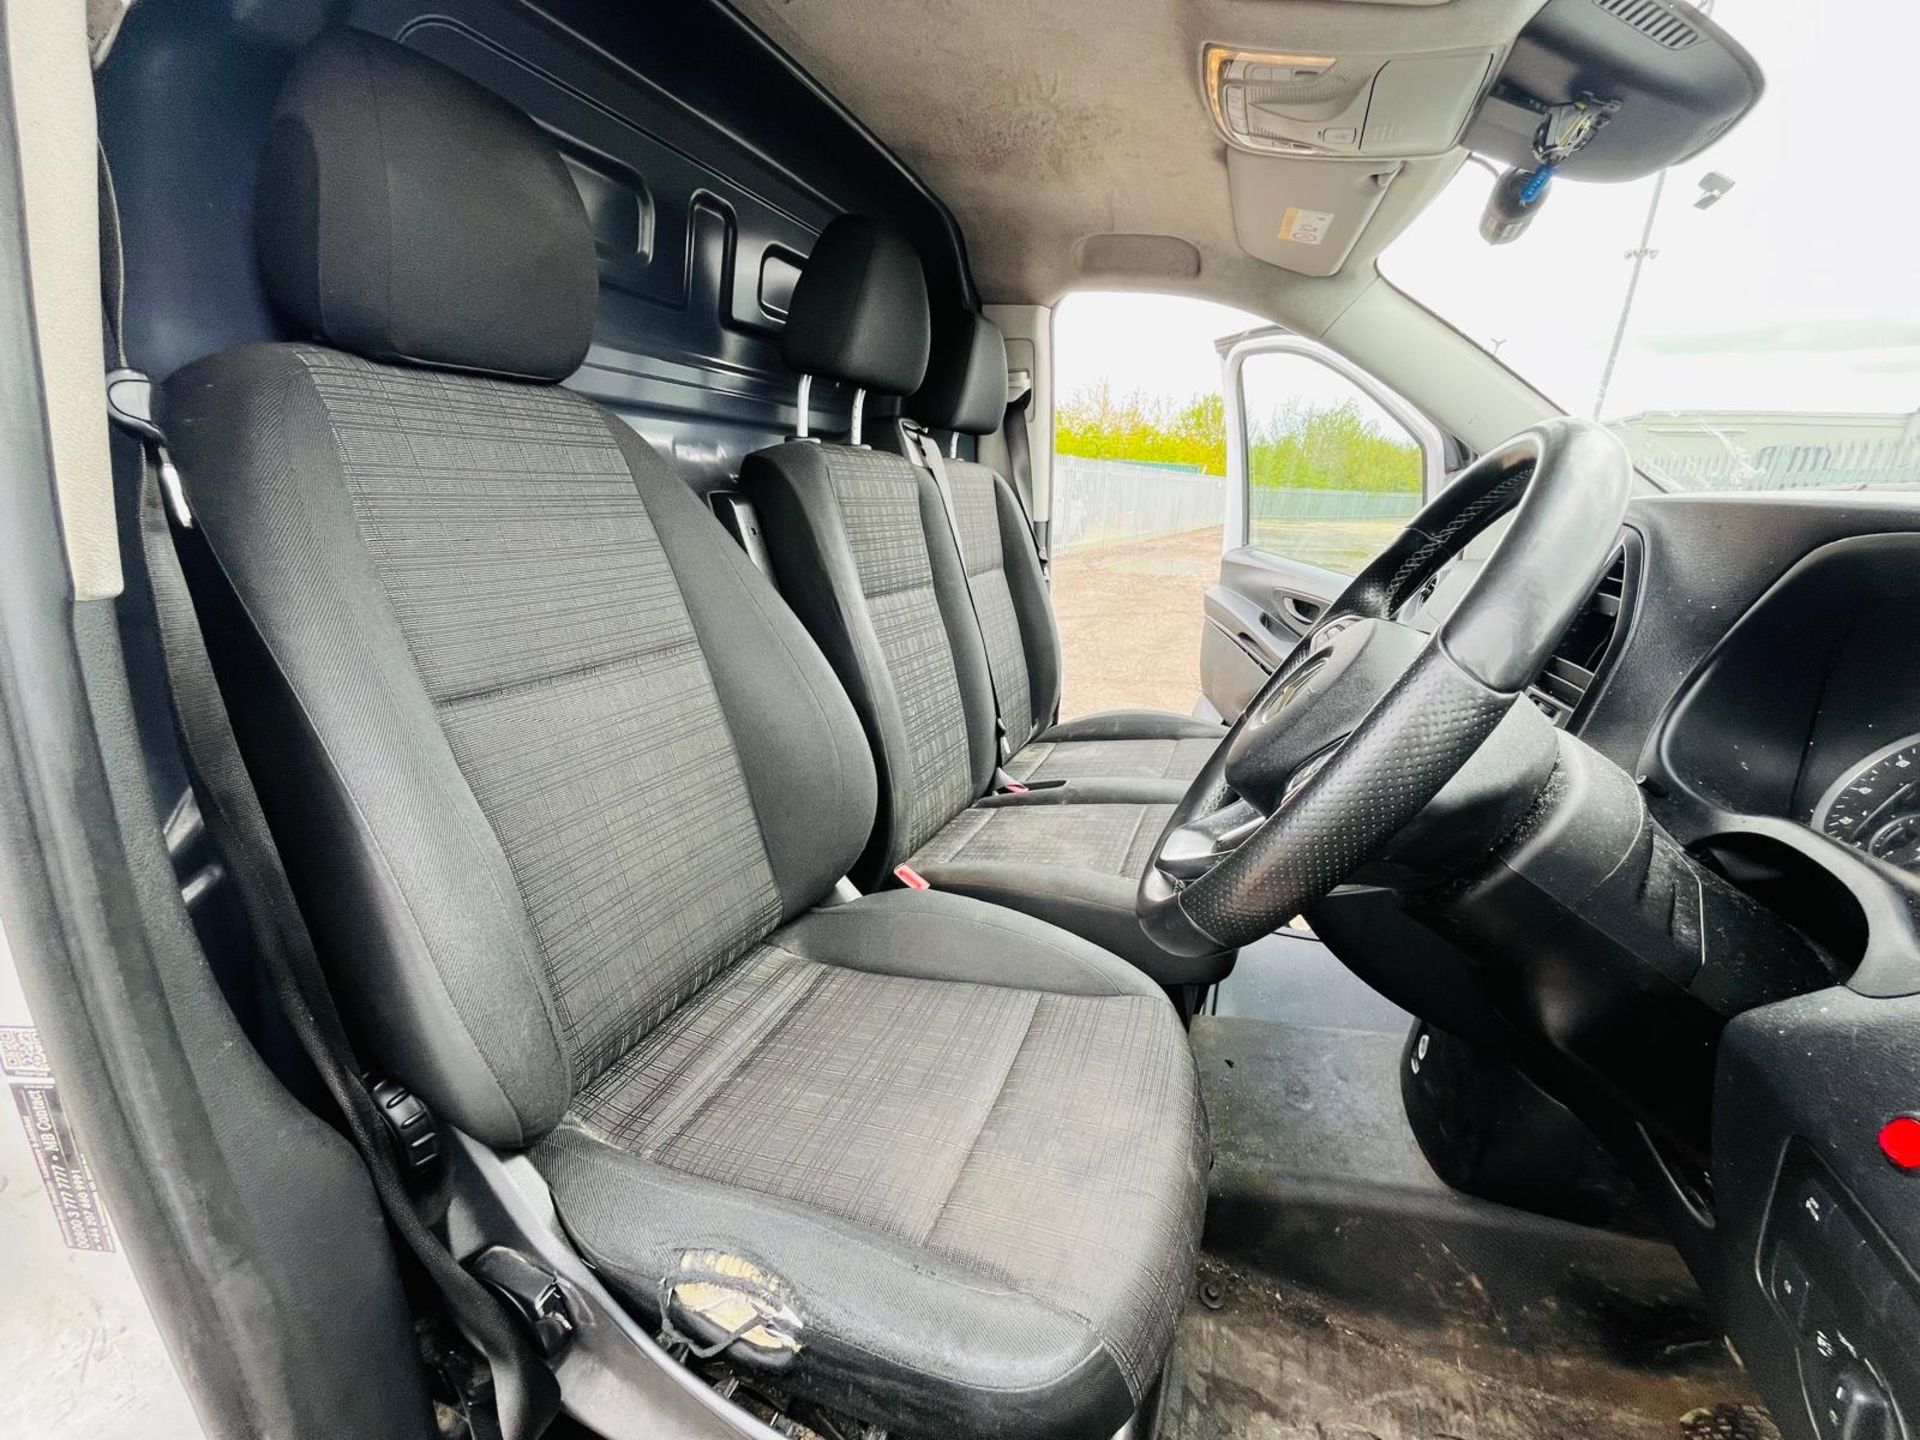 Mercedes Benz Vito 2.1 114 CDI RWD Fridge/Freezer 2019 '19 Reg '-ULEZ Compliant-Parking Sensors-A/C - Image 17 of 27